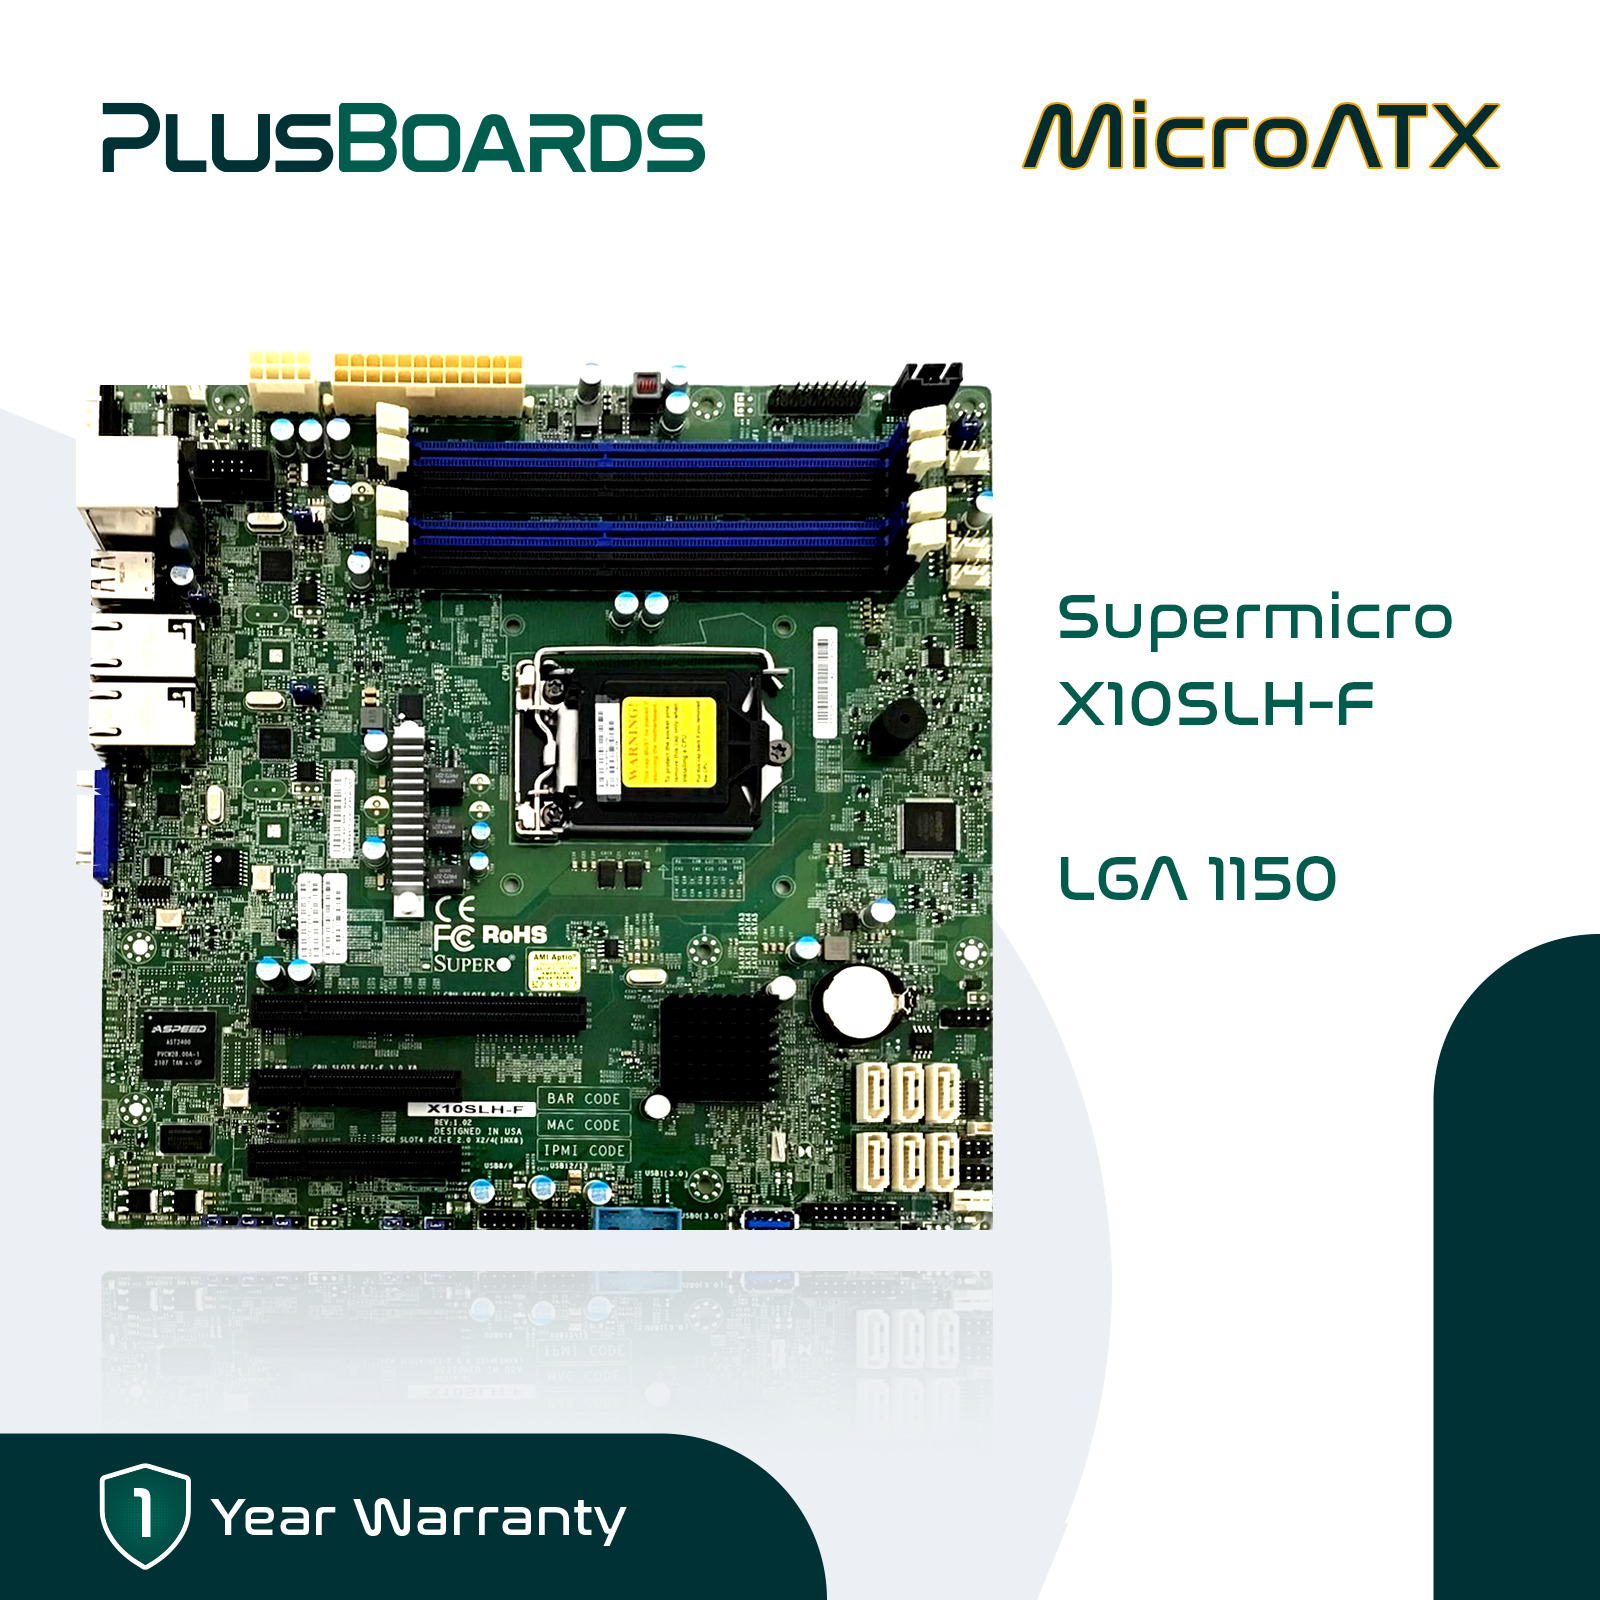 New Supermicro X10SLH-F LGA 1150 i3v4 Intel C226 MicroATX Server Motherboard